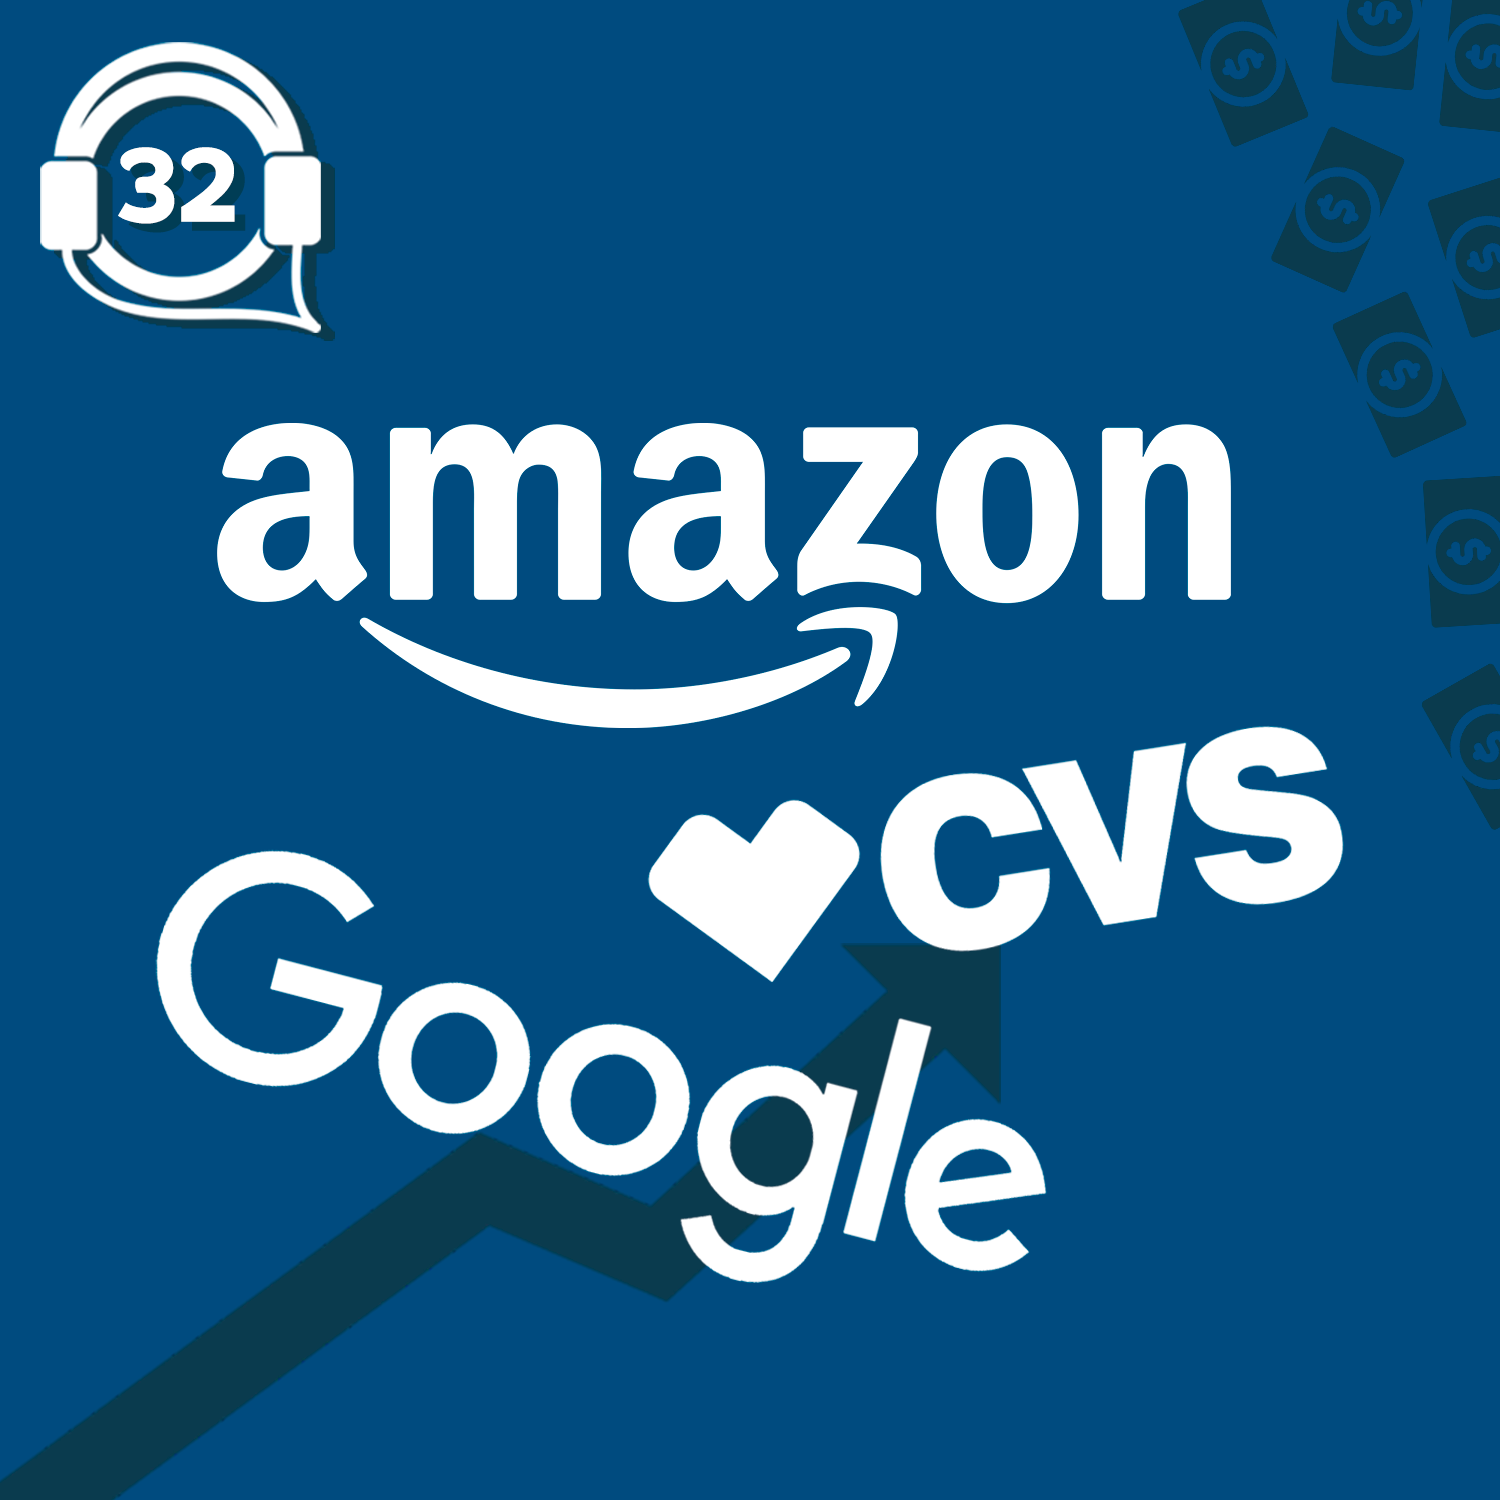 Ações estrangeiras: Google, Amazon e CVS - YUBB4 #32